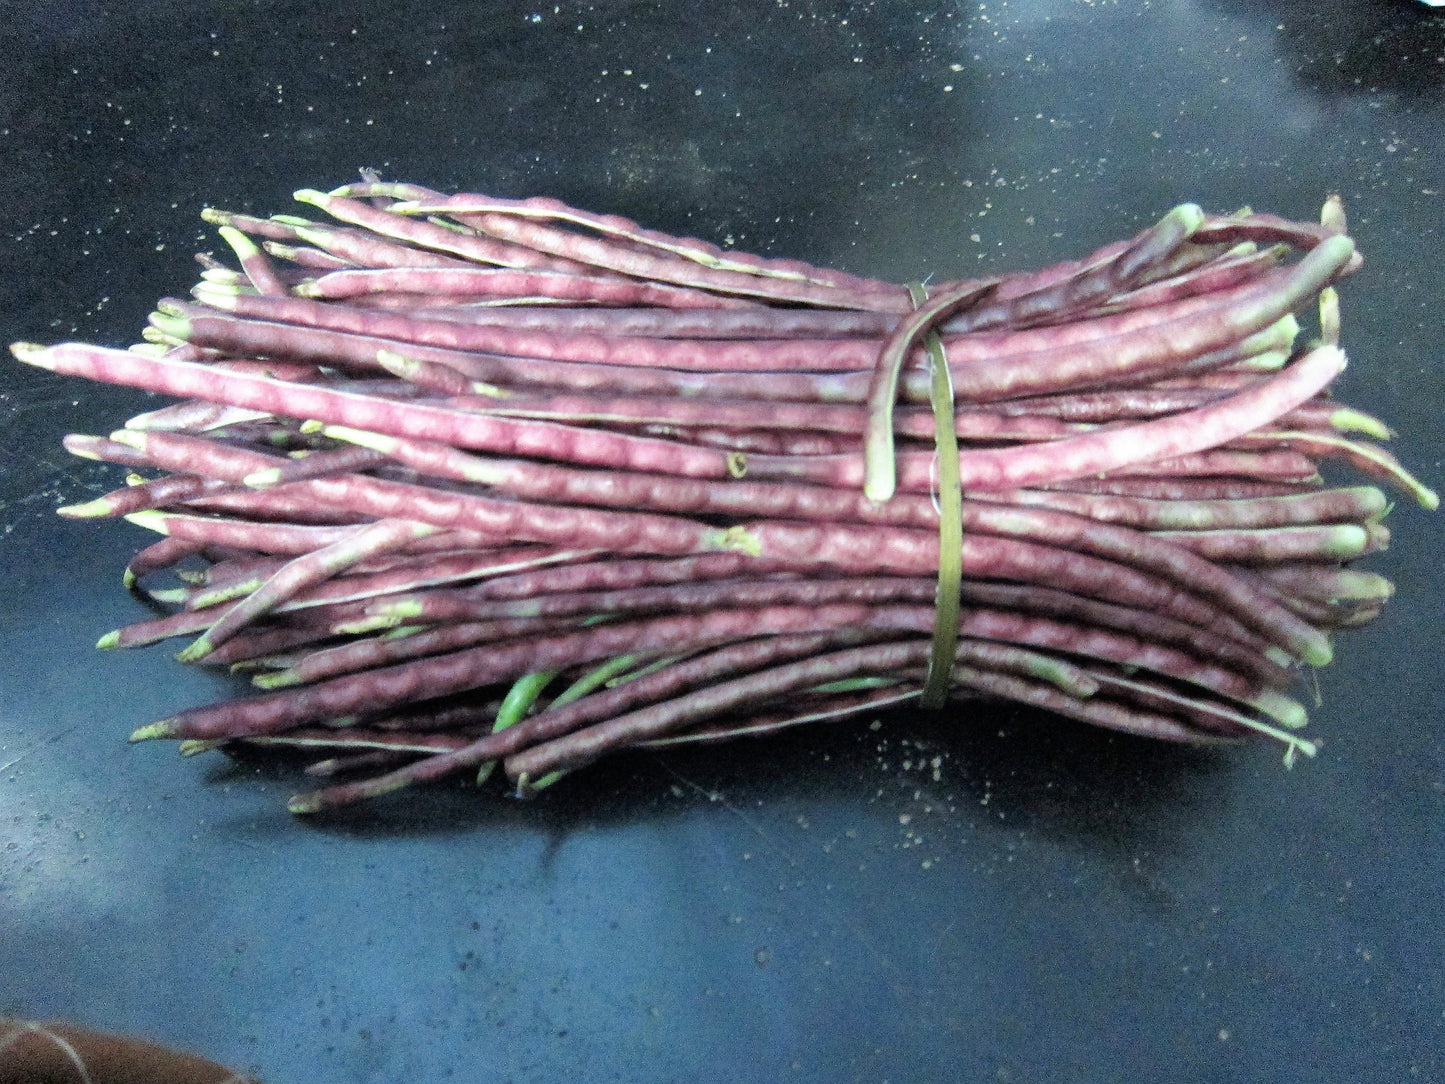 25 RED NOODLE BEAN Yard Long Asparagus Bean Chinese Phaseolus Vulgaris Legume Vegetable Seeds